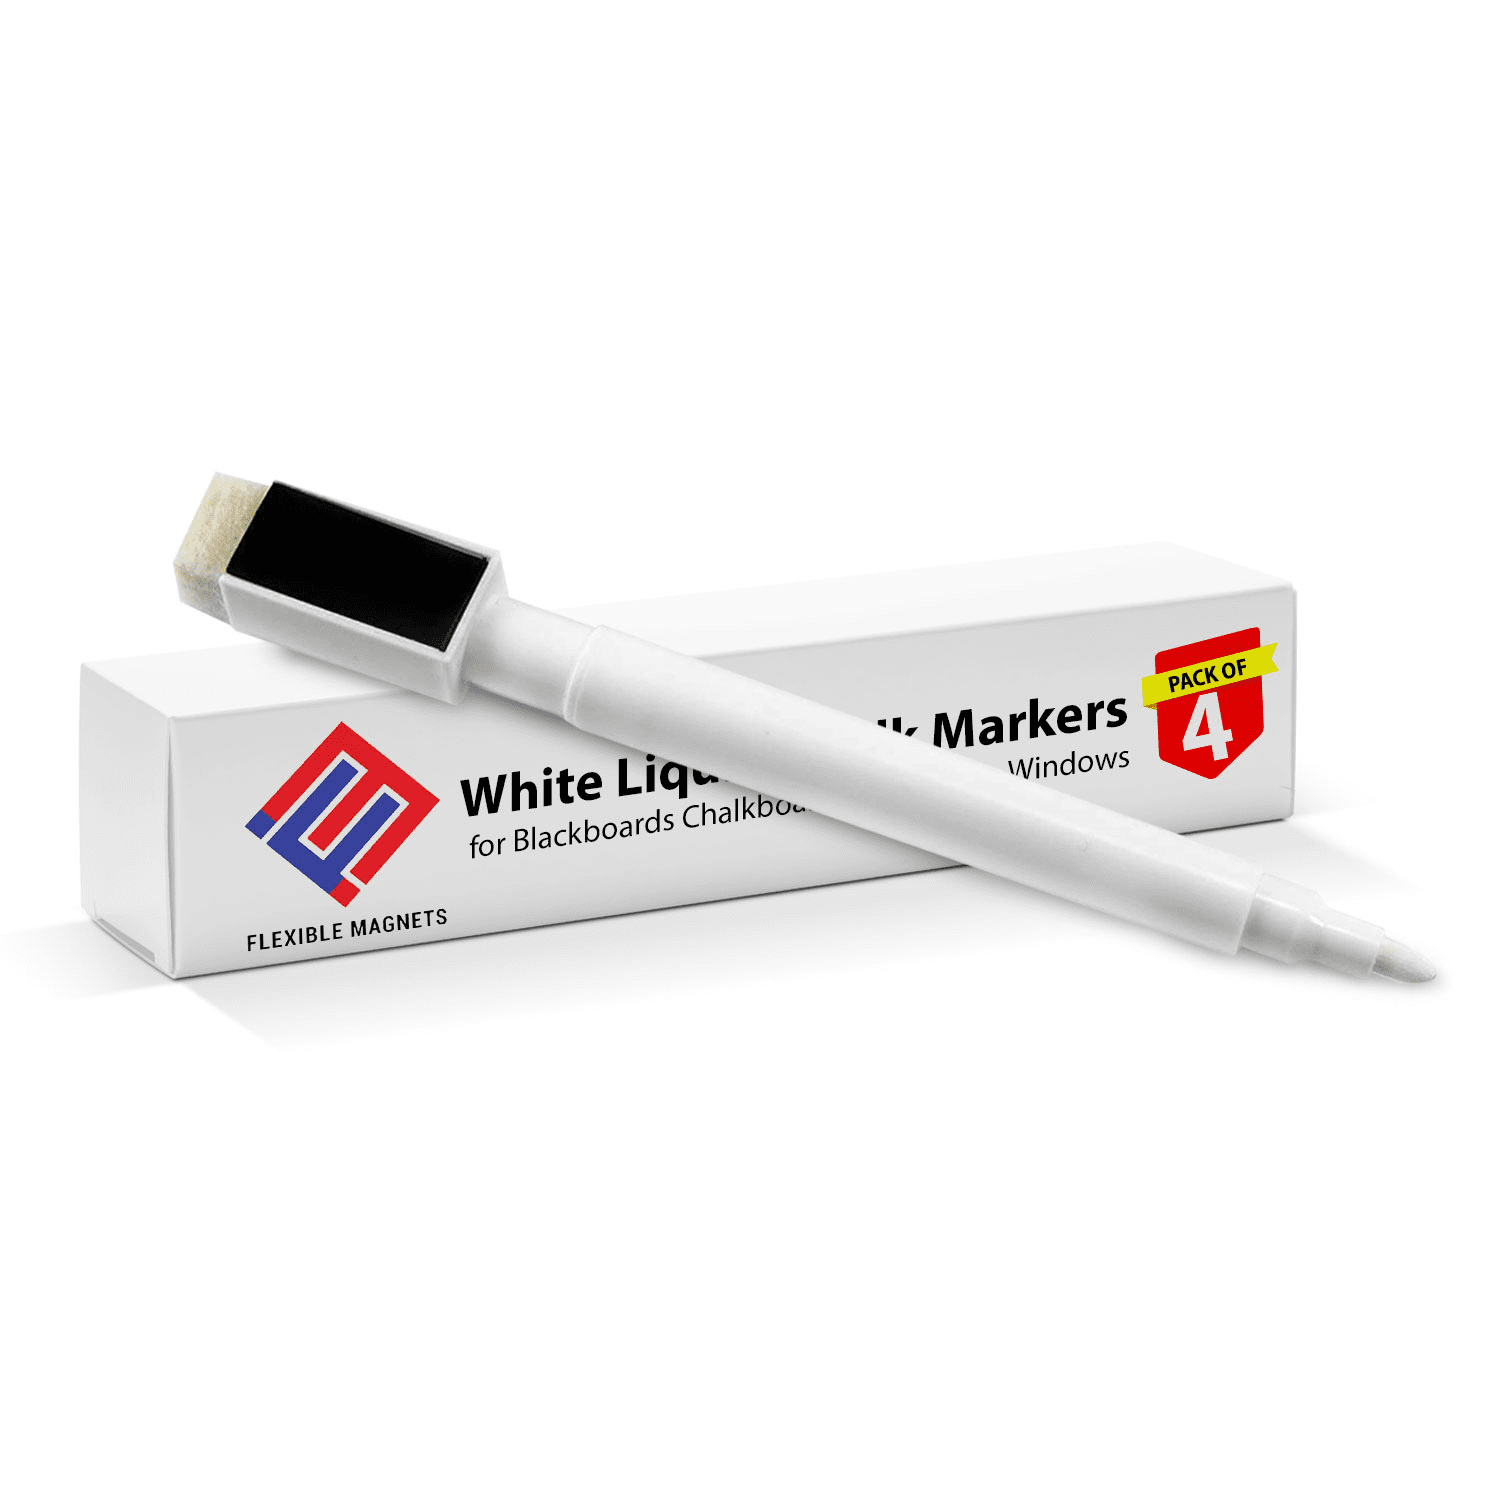 SILENART White Chalk Markers 24 Pack, Chalk Pens White Liquid Chalk Markers  White Erasable Chalkboard Markers for Kids, Chalk Marker for Signs Labels